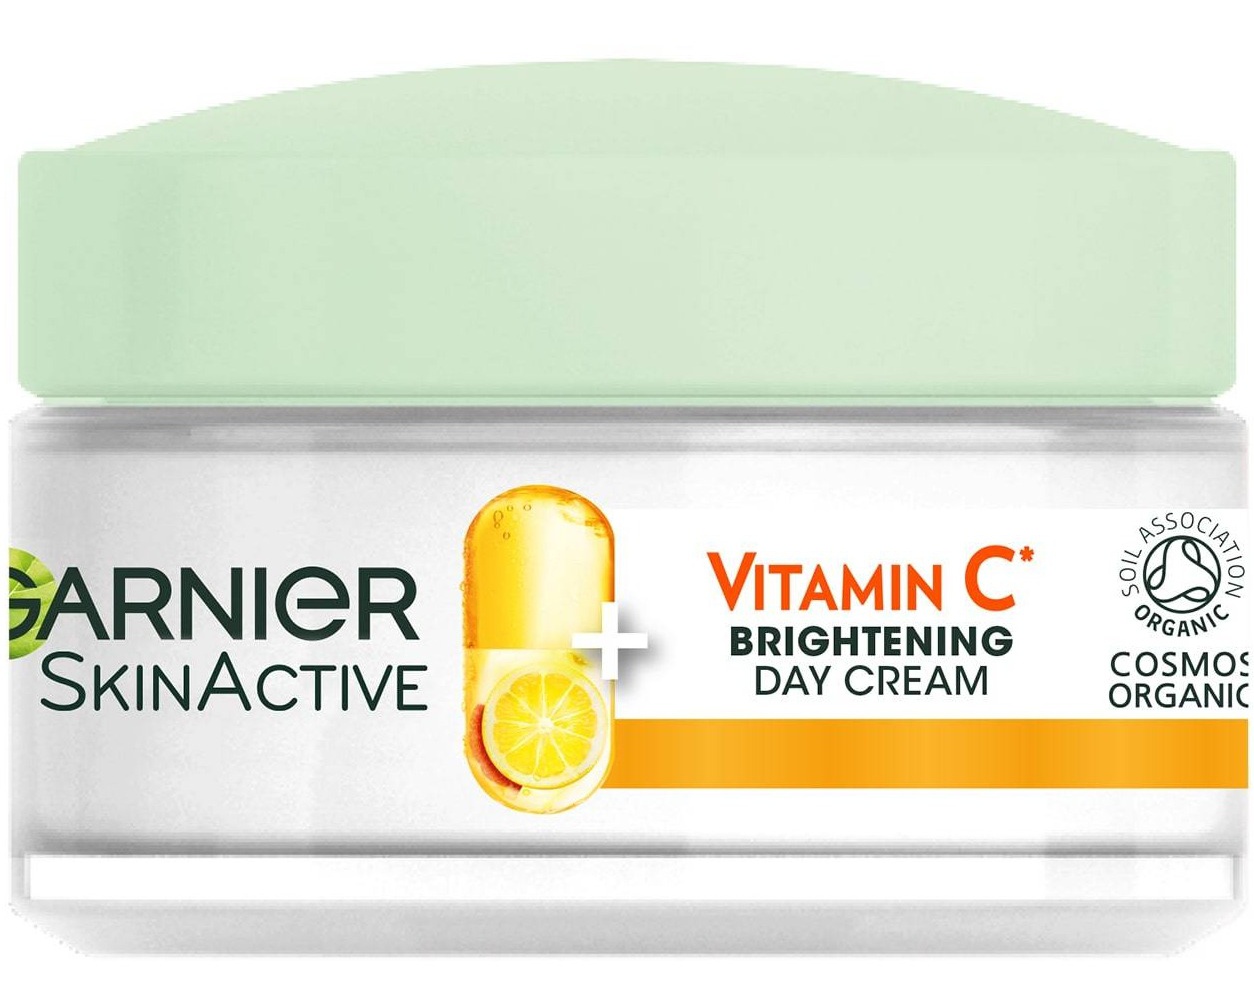 Garnier Skinactive Vitamin C Face Moisturiser For Brightening Day Cream,